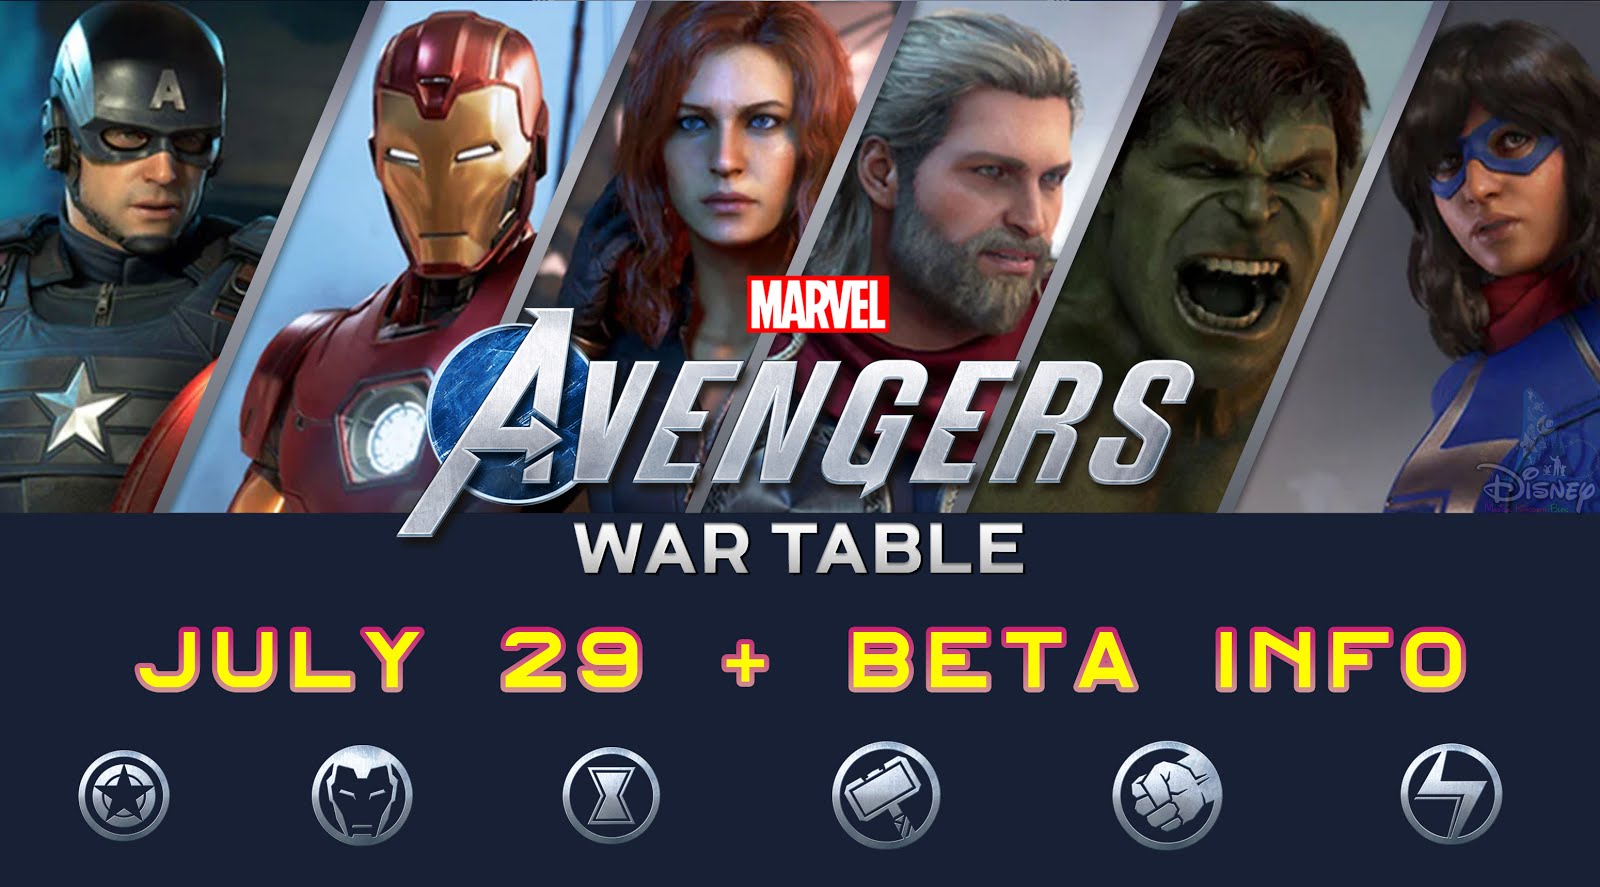 Play Avengers Beta Watch Second WAR TABLE Information | Disney Magical Kingdom Blog